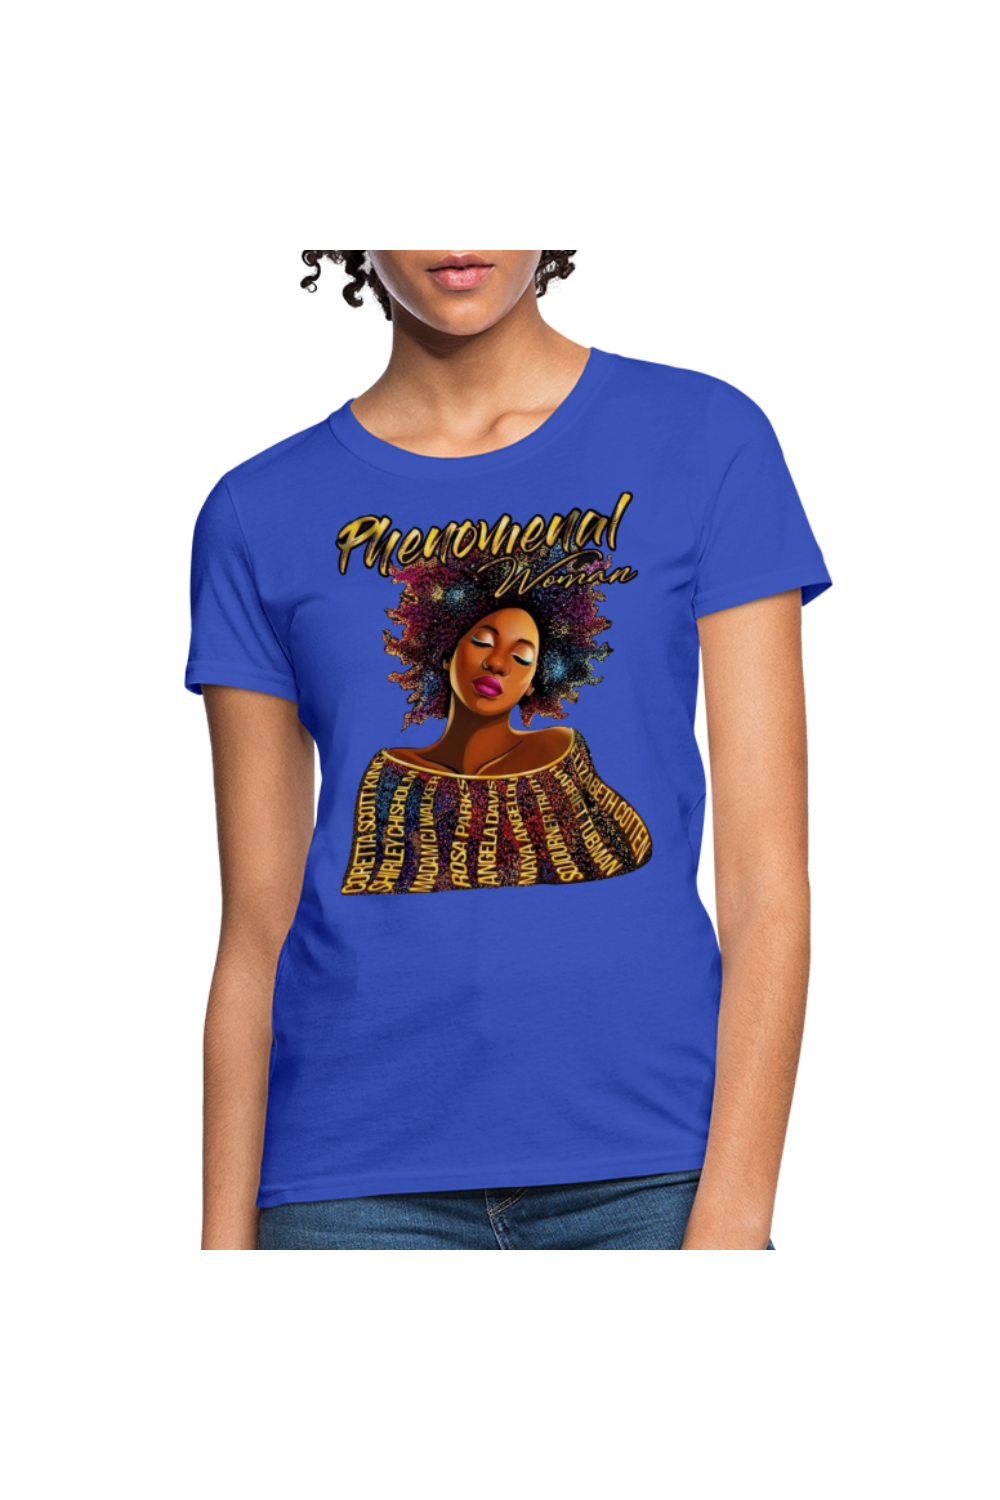 African American Women's Phenomenal Woman Short Sleeve T-Shirt - royal blue